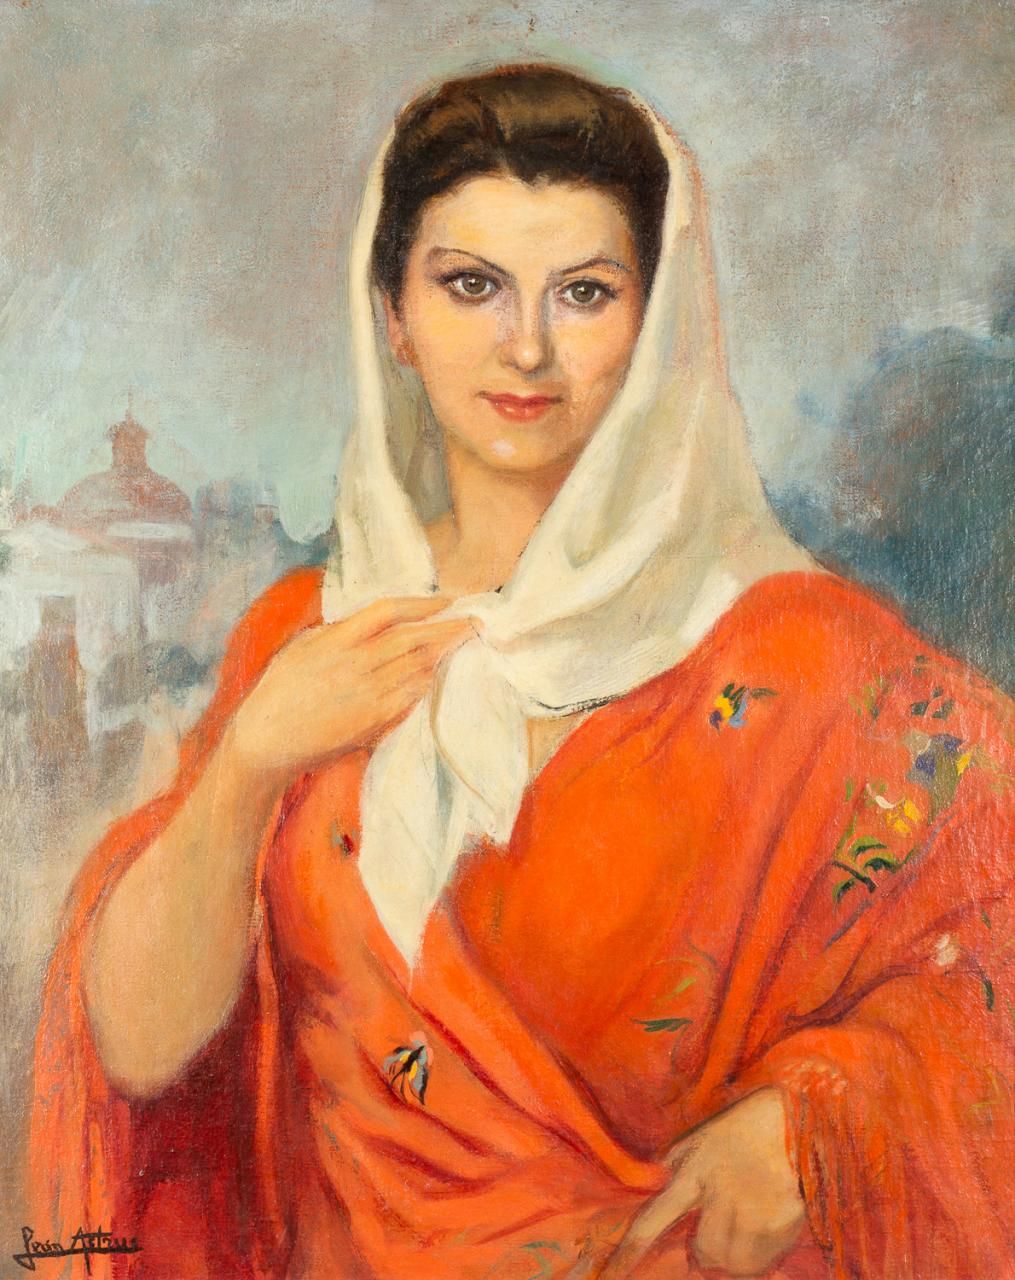 MANUEL LEÓN ASTRUC (Zaragoza, 1889-Madrid, 1965). Frau mit rotem Schal
Öl auf Le&hellip;